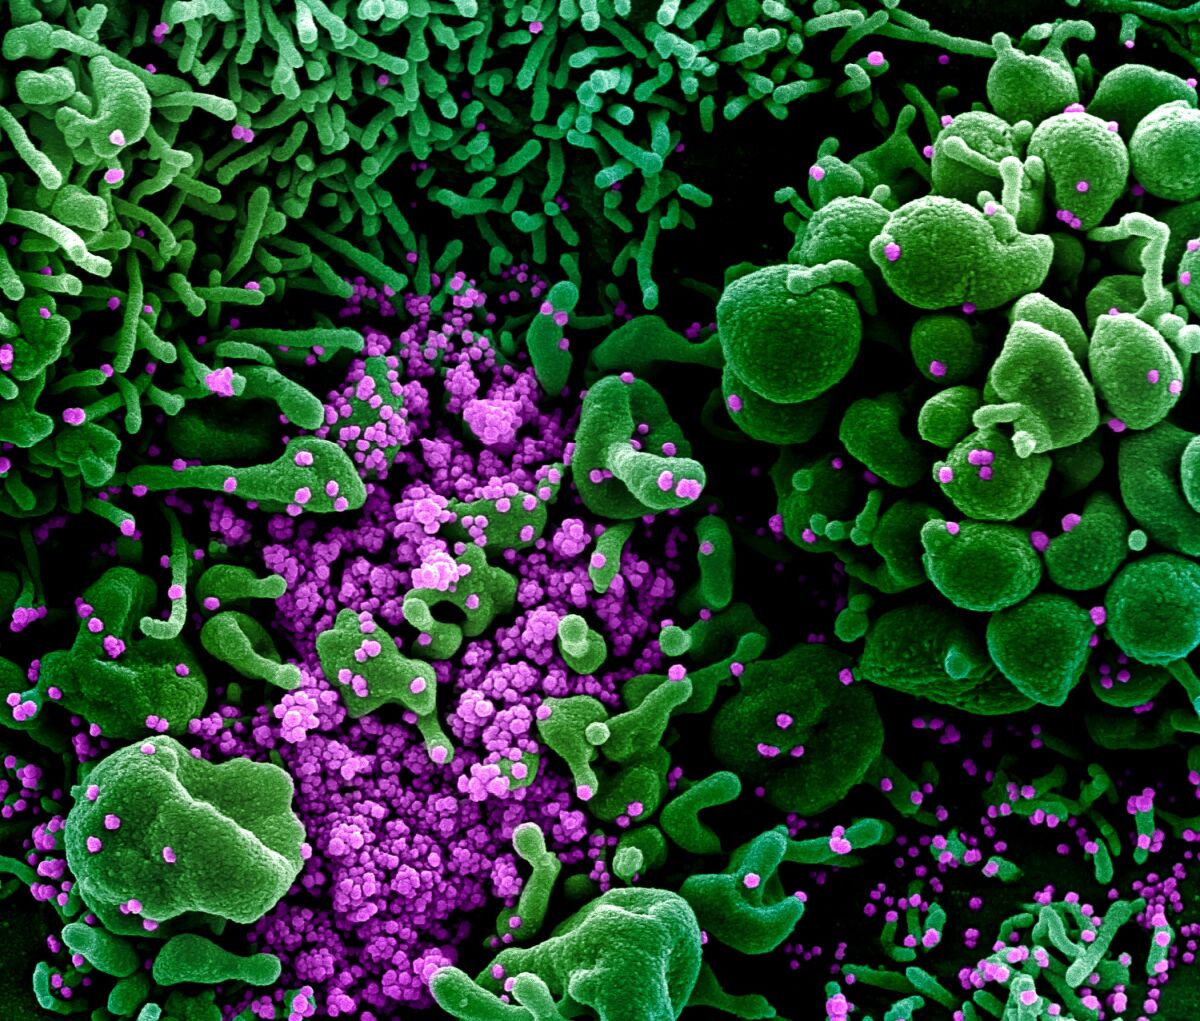 The novel coronavirus under a microscope